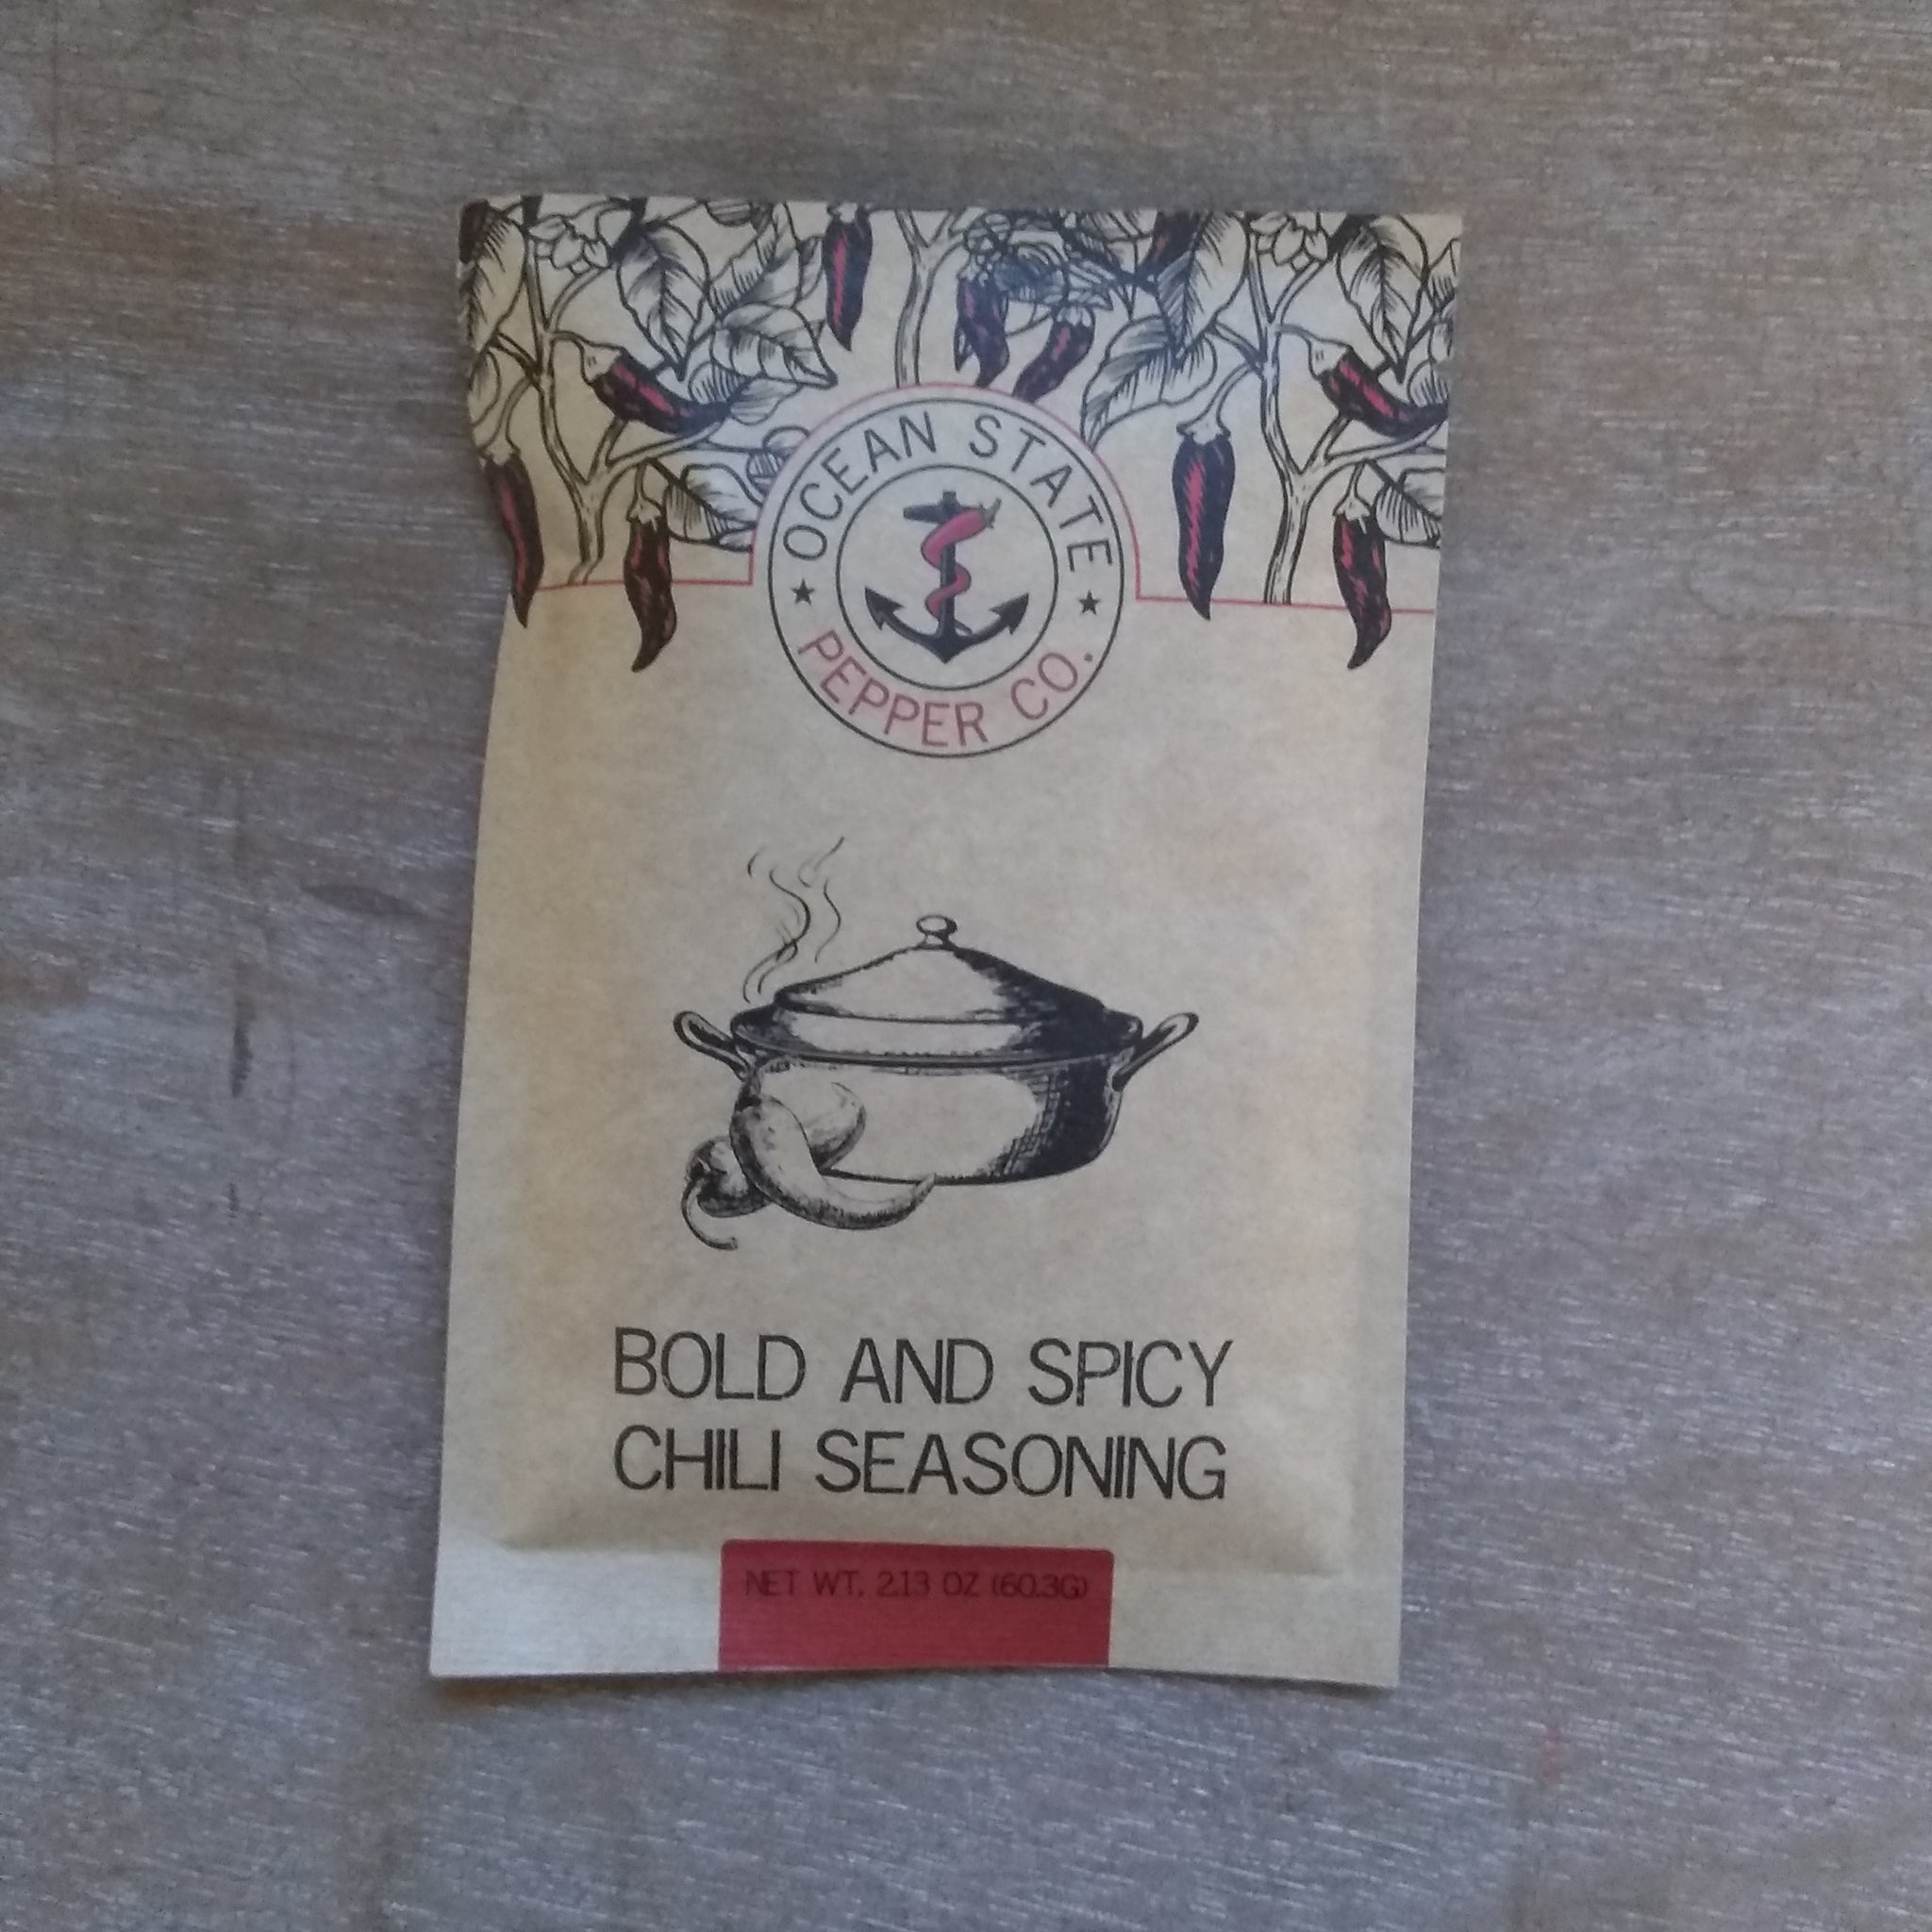 Seasonings, Ocean State Pepper Co: Pouch